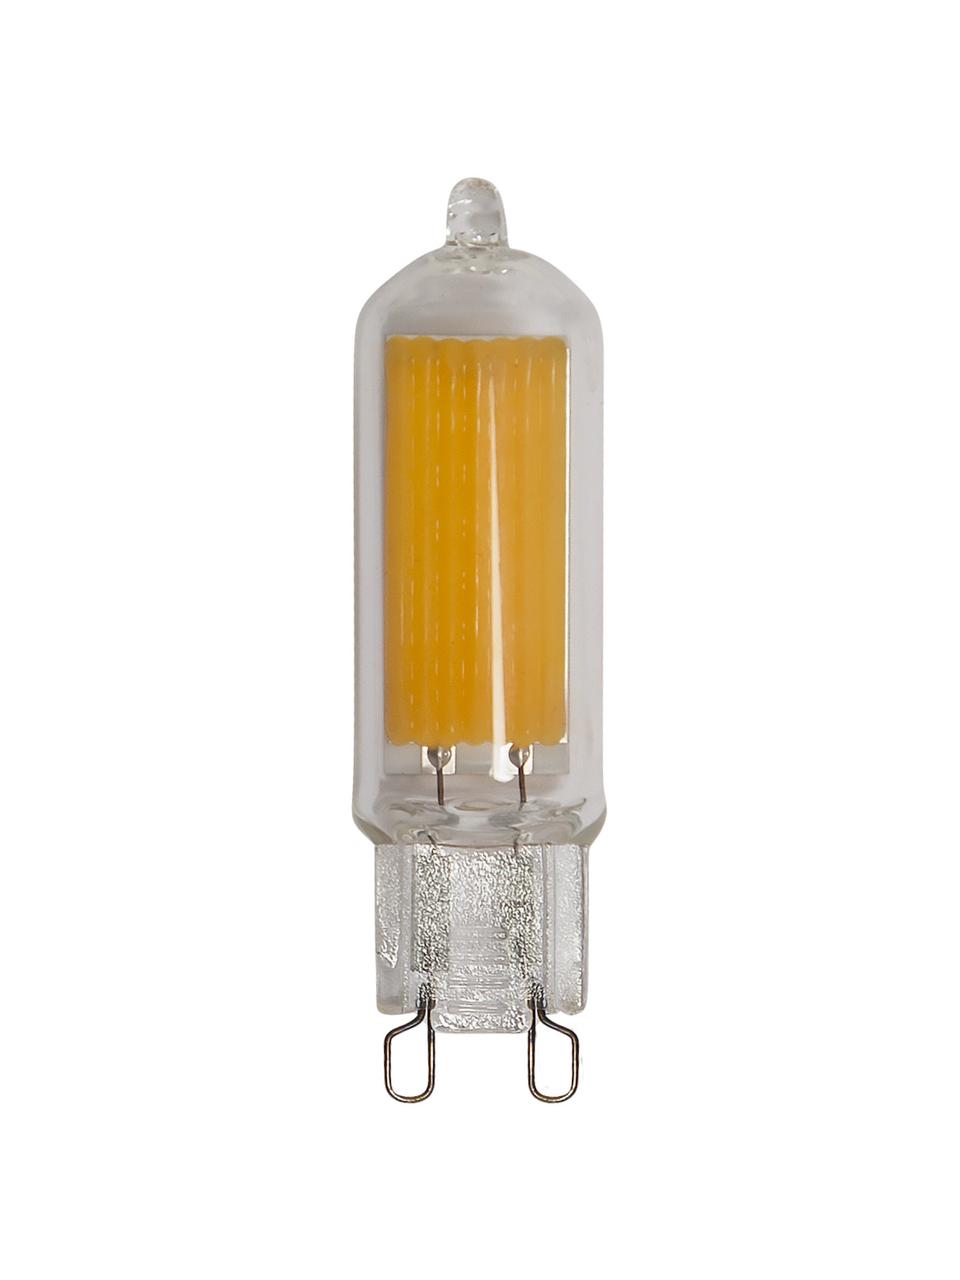 G9 Leuchtmittel, 3W, warmweiss, 1 Stück, Leuchtmittelschirm: Glas, Leuchtmittelfassung: Aluminium, Transparent, Ø 1 x H 6 cm